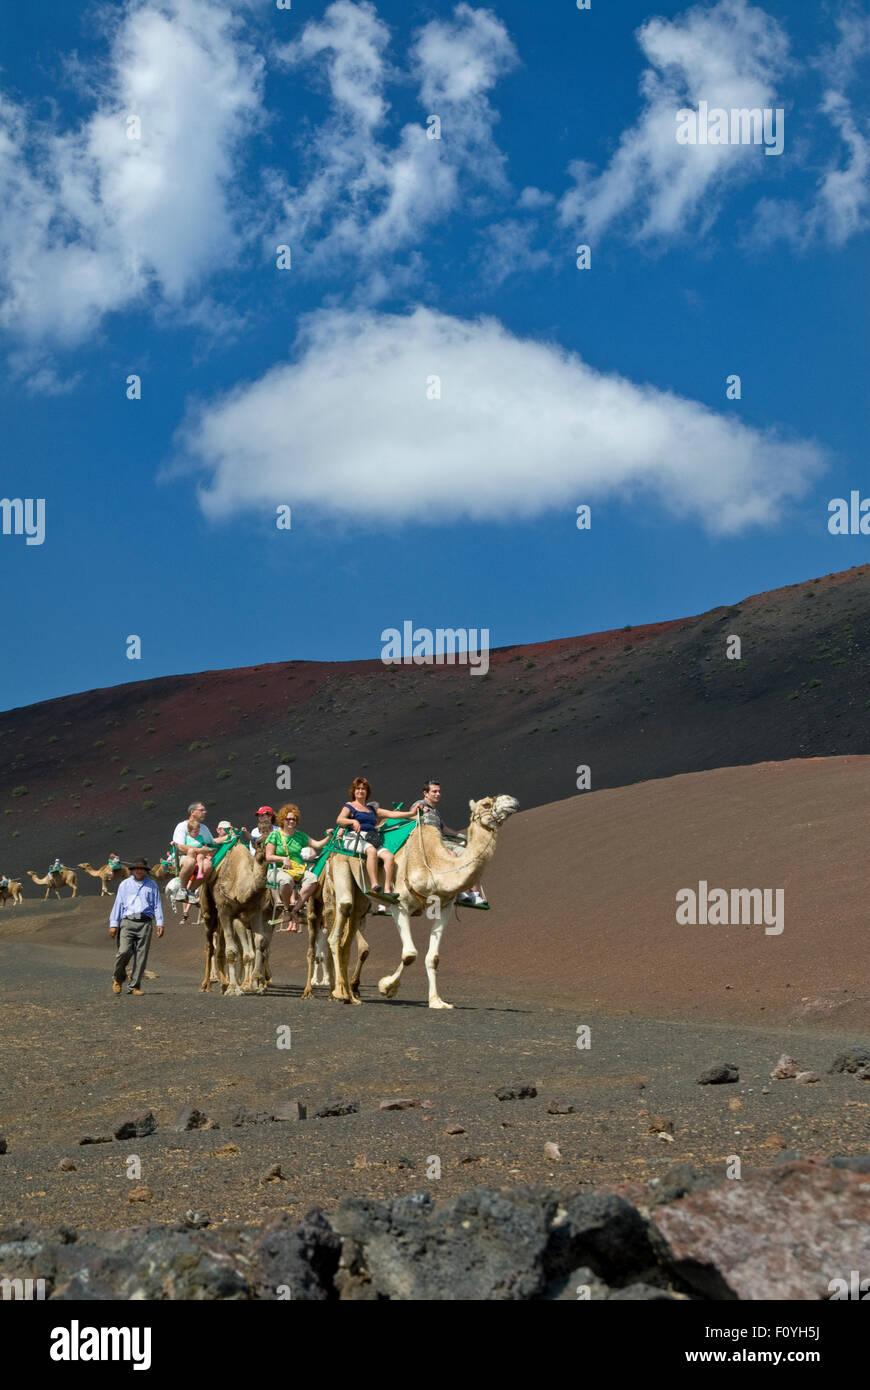 TIMANFAYA Camel train trekking trek with tourists in Timanfaya National Park Lanzarote Canary Islands Spain Stock Photo